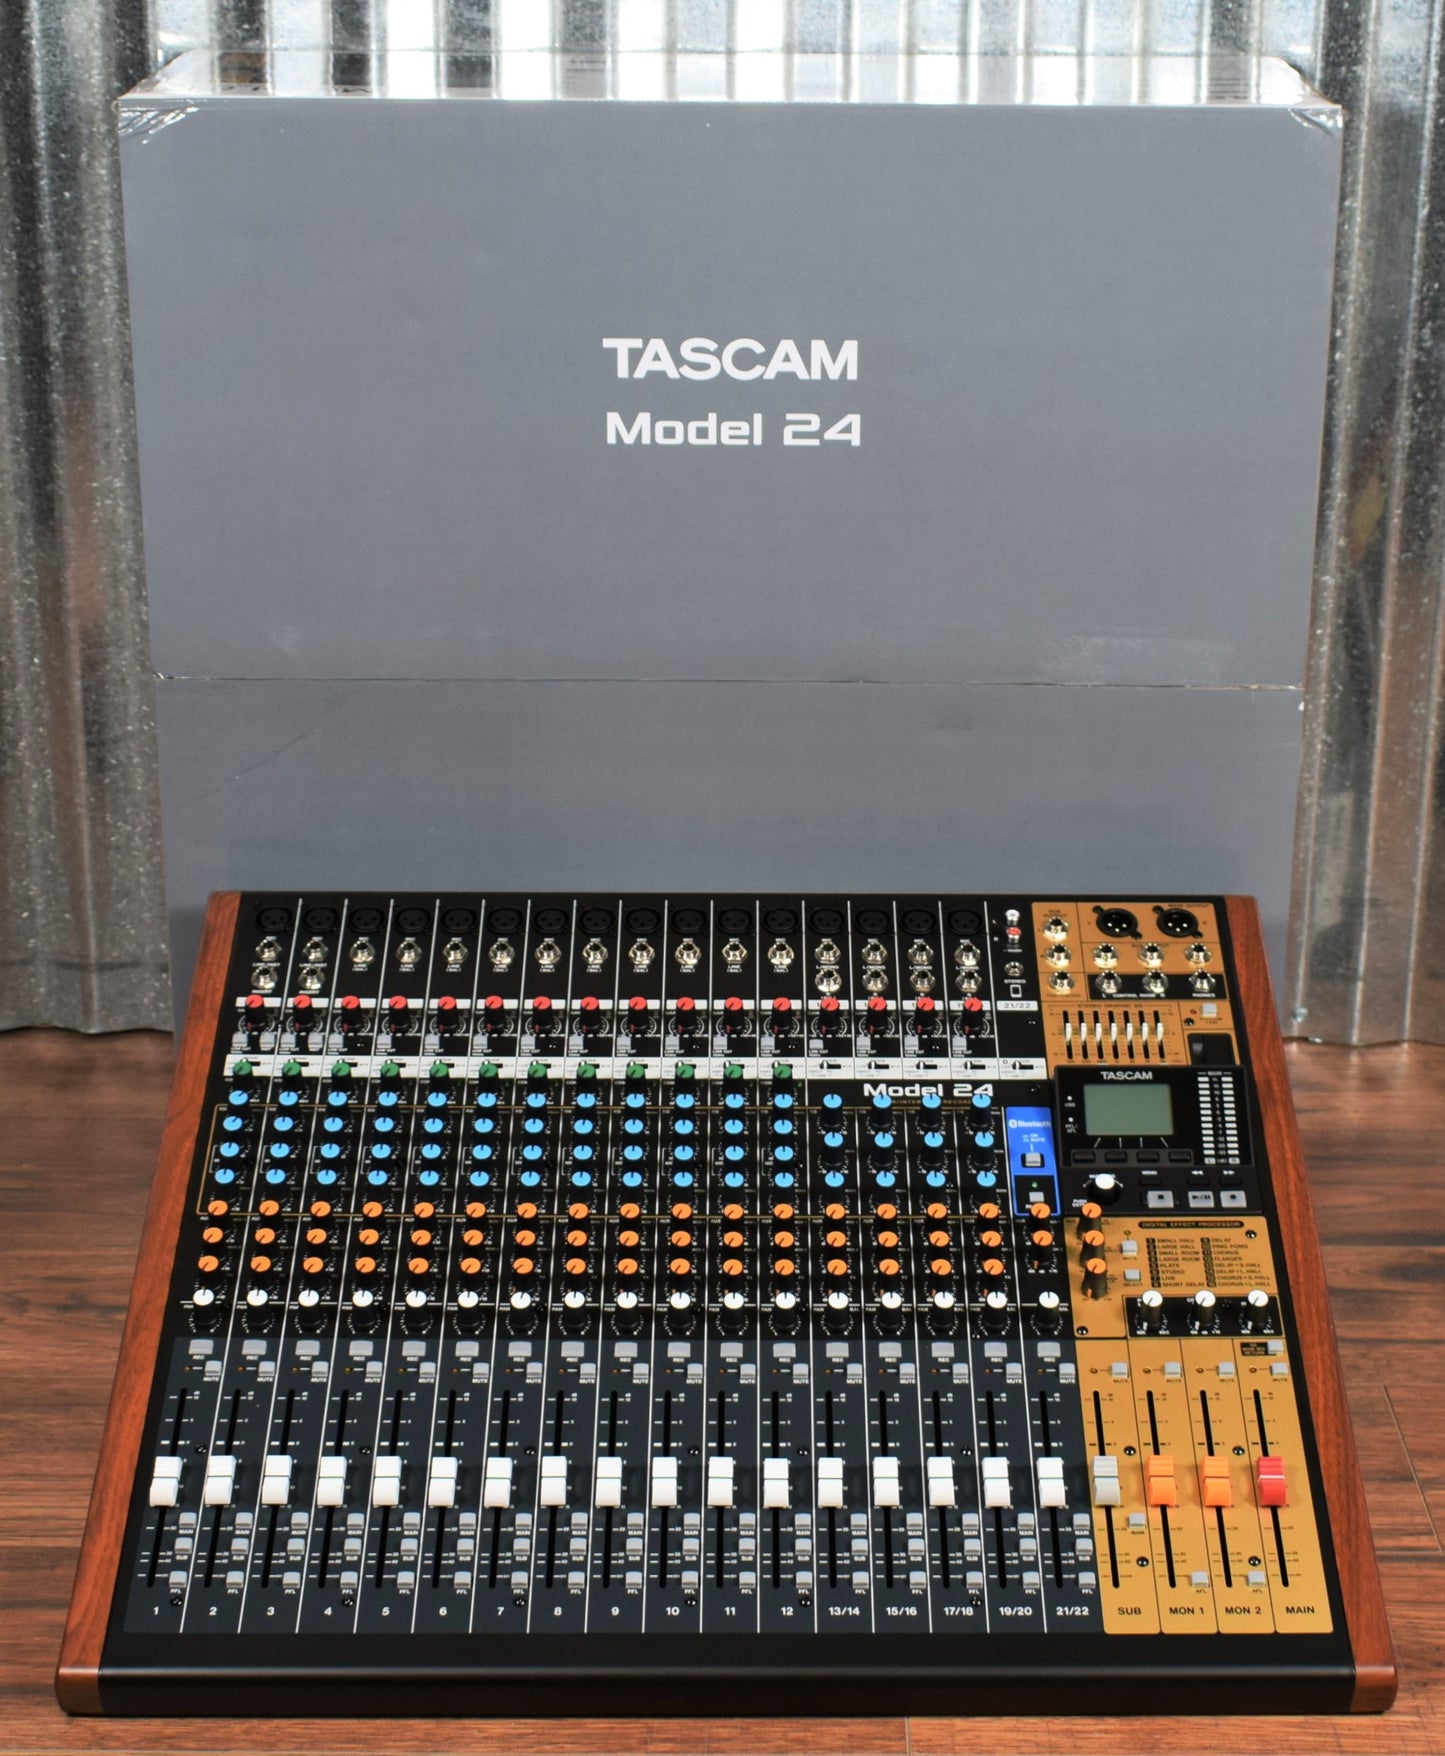 Tascam Model 24 Mixer USB Audio Interface Recorder Controller